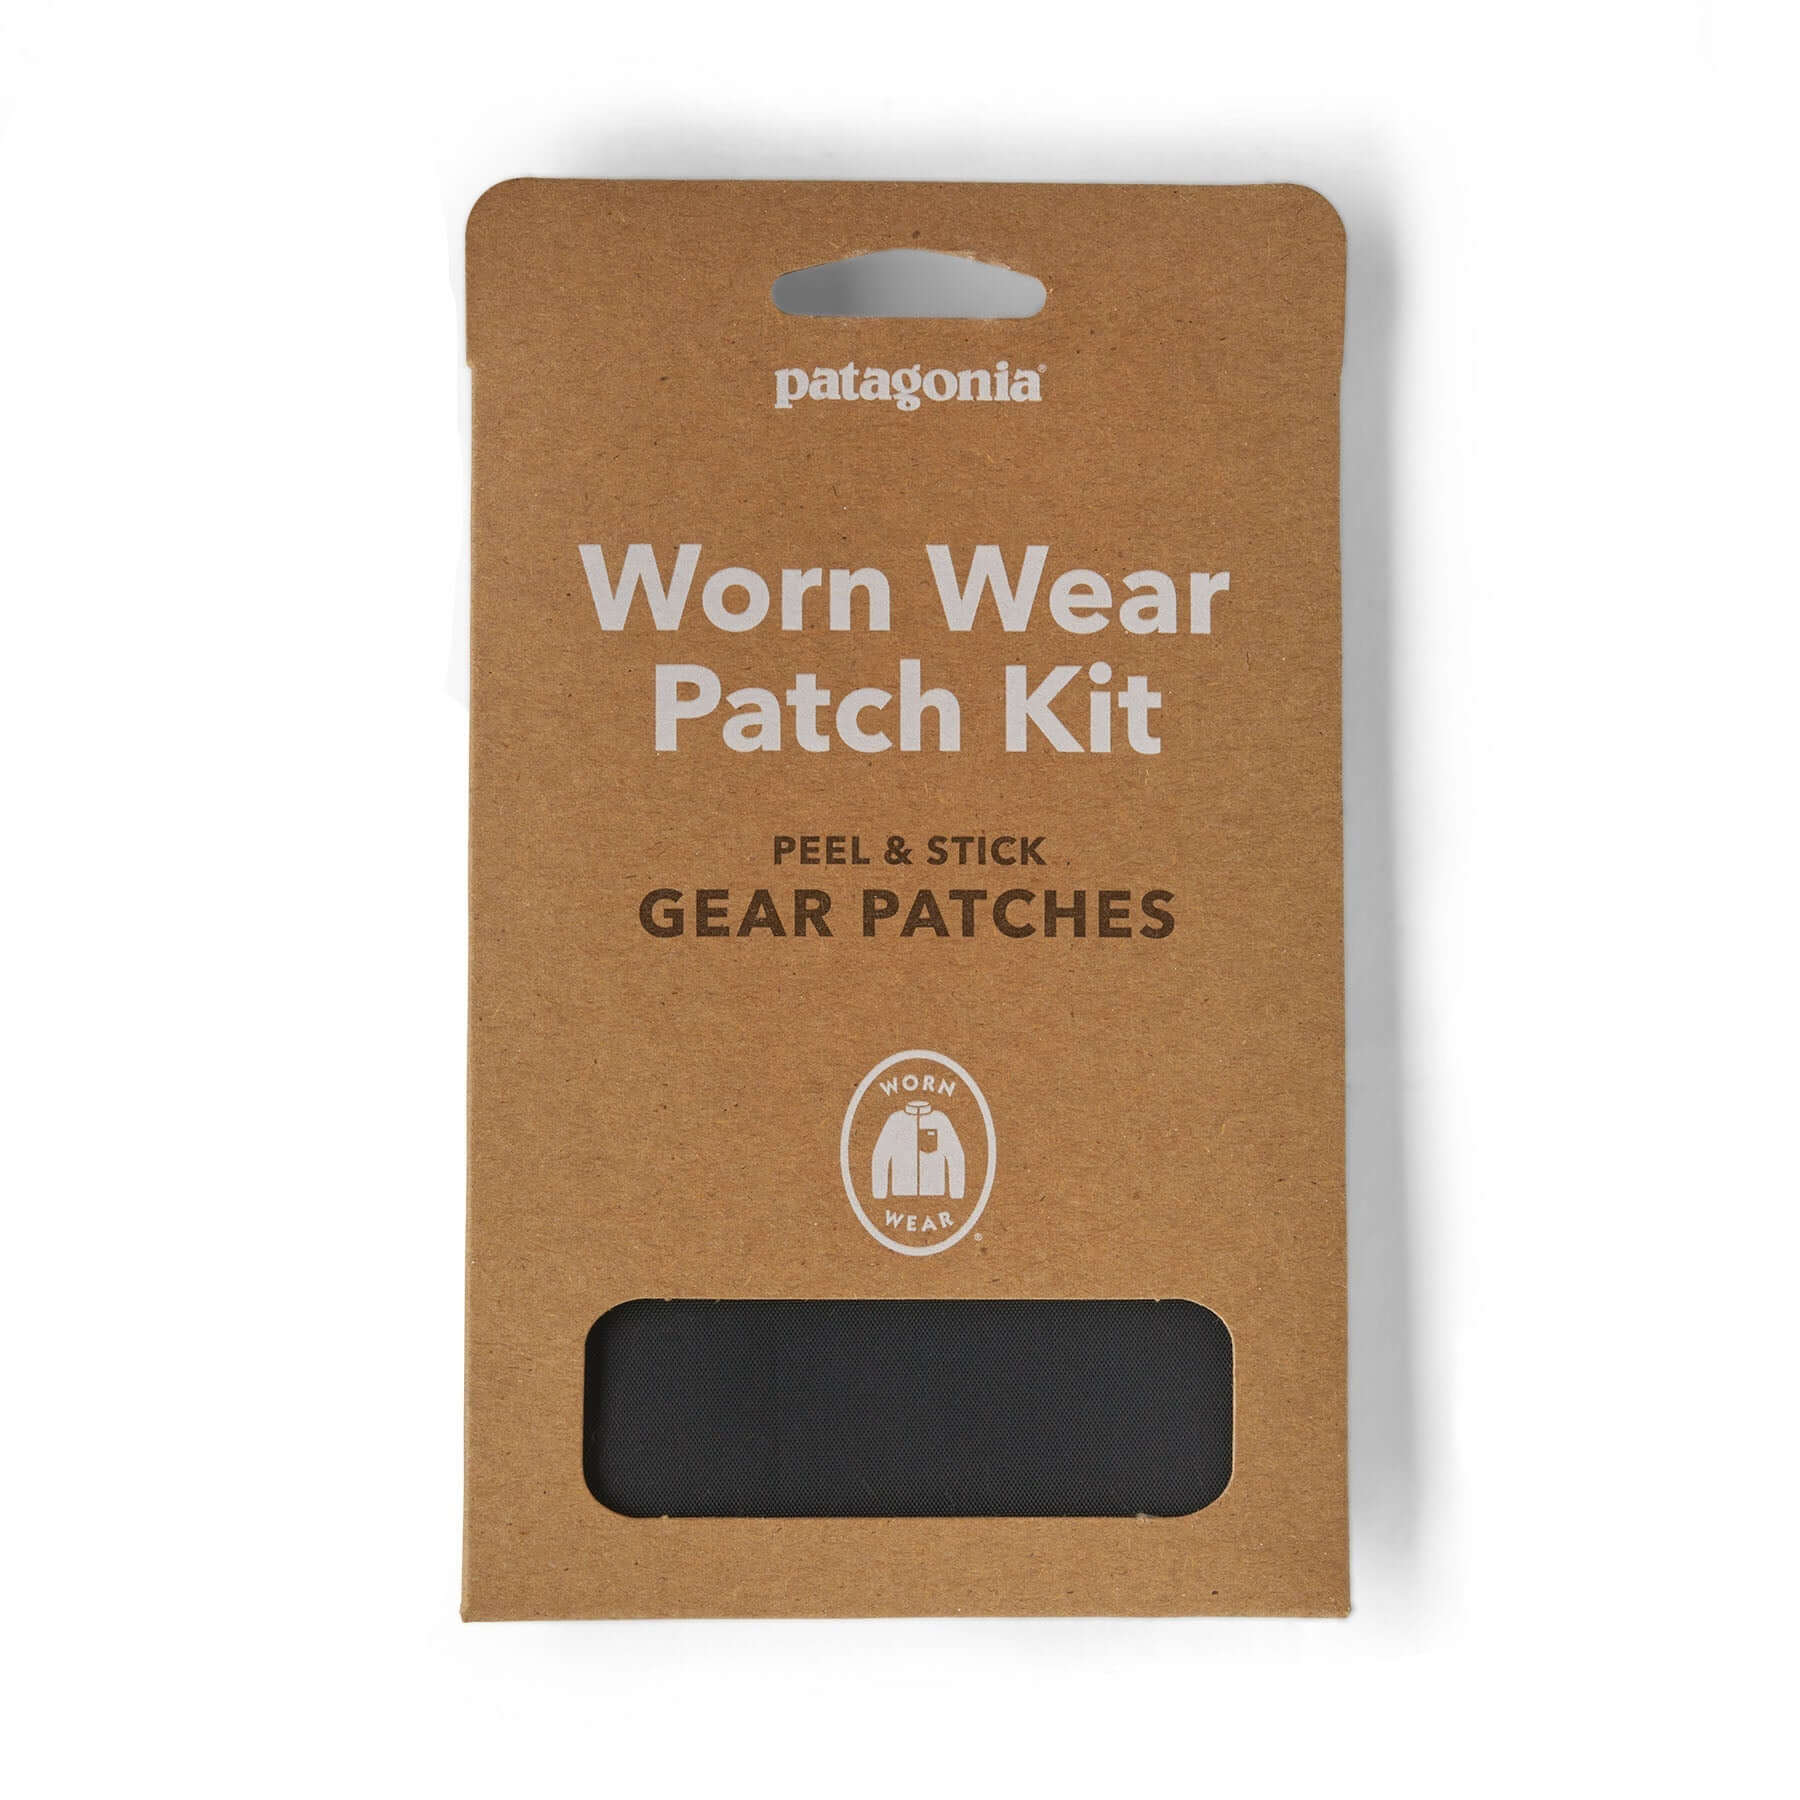 Worn Wear Patch Kit in BLACK | Patagonia Bend